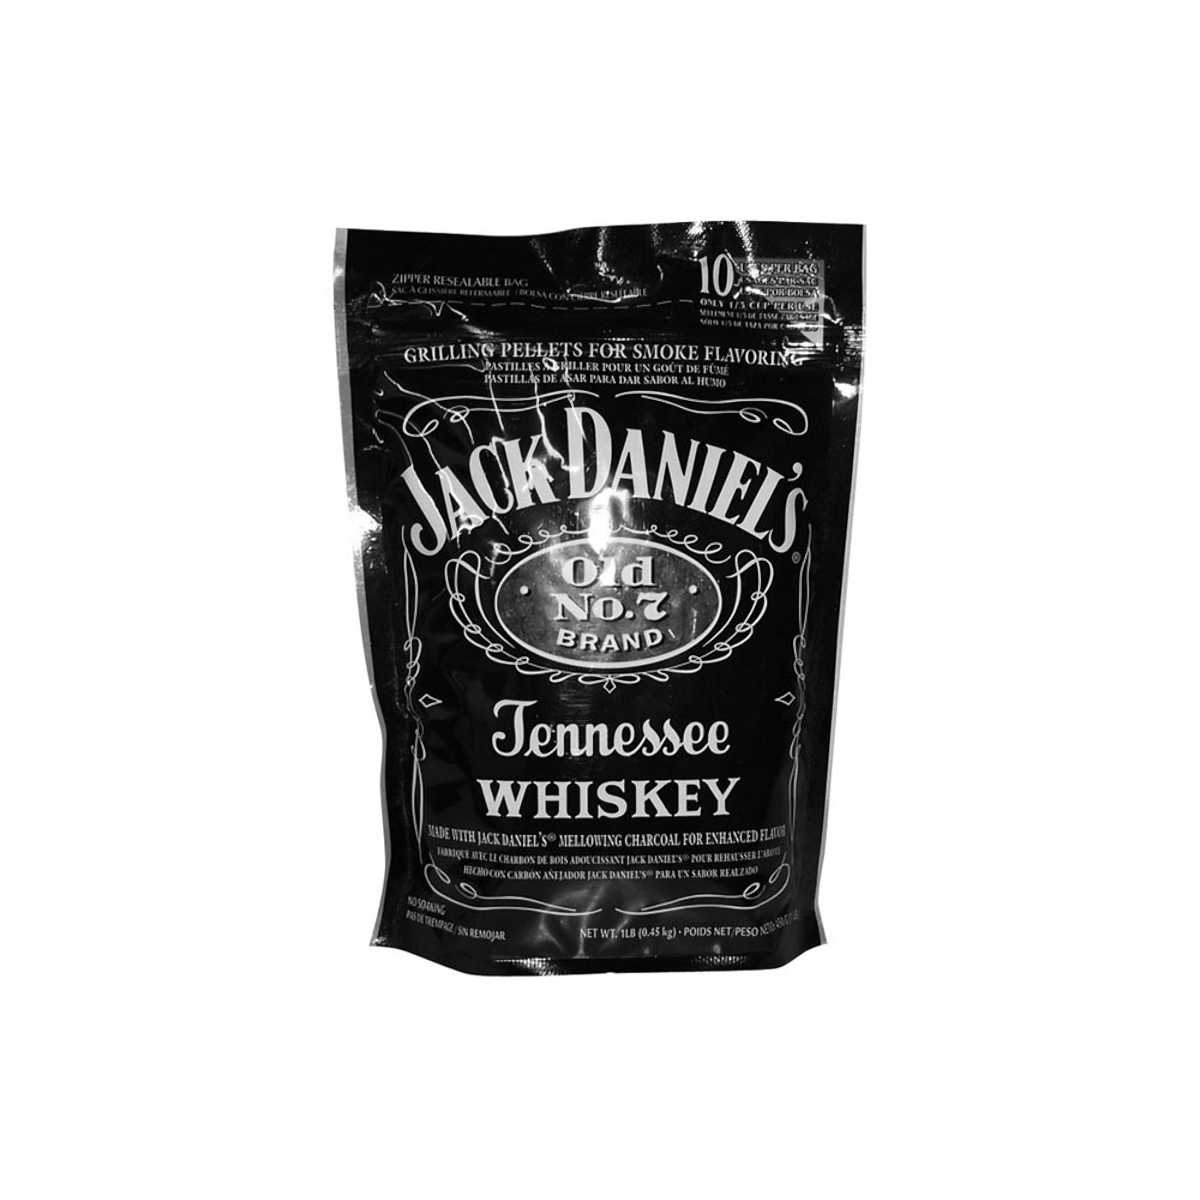 Jack Daniel's Wood Smoking Chips, 1 kg